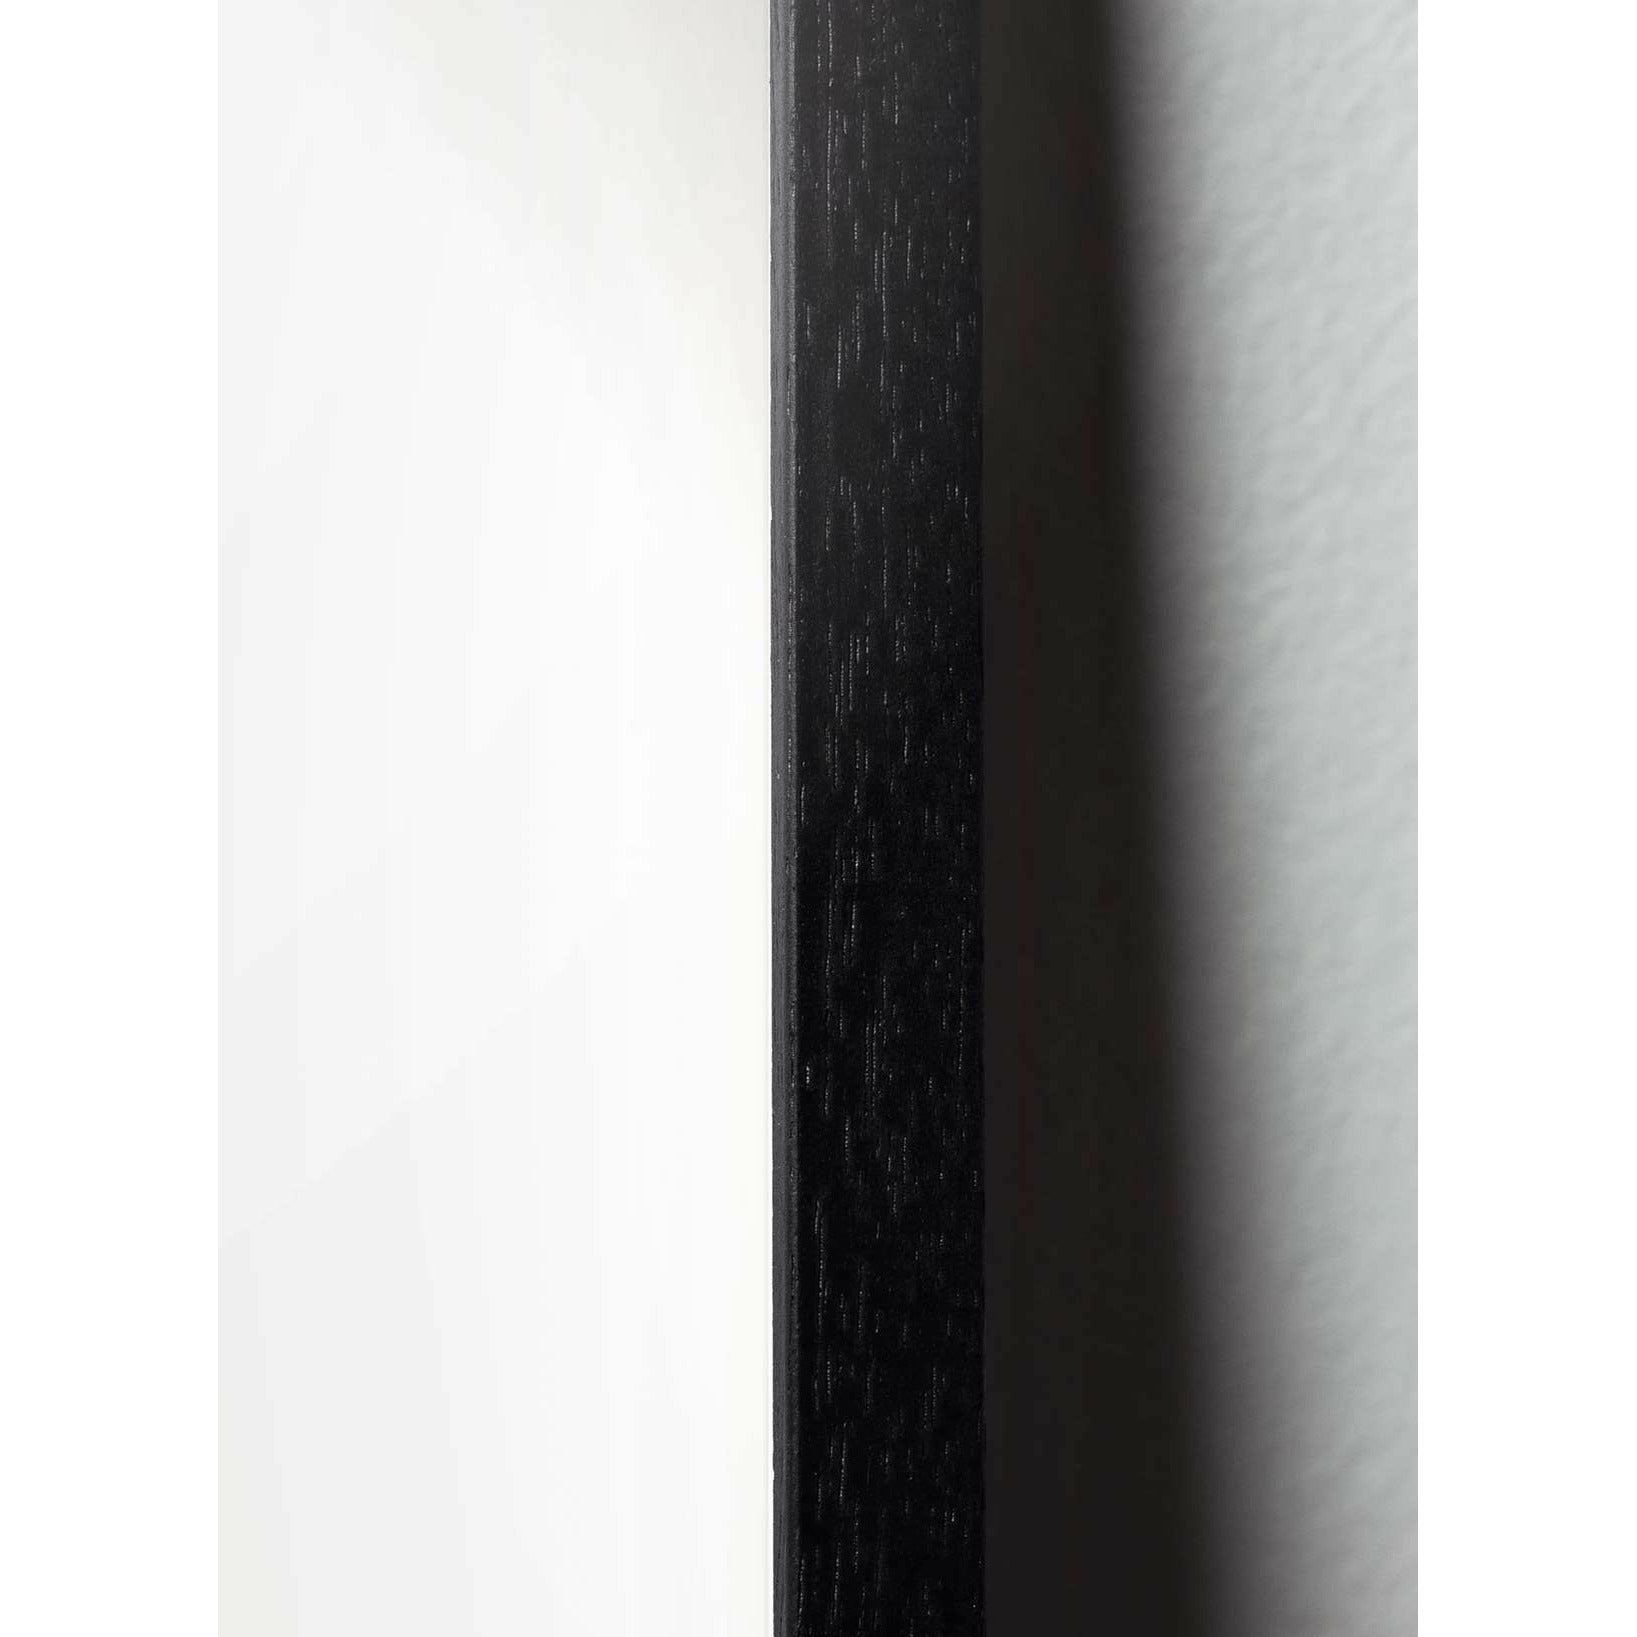 Brainchild Pelikan Classic Poster, Frame In Black Lacquered Wood 30x40 Cm, Dark Blue Background